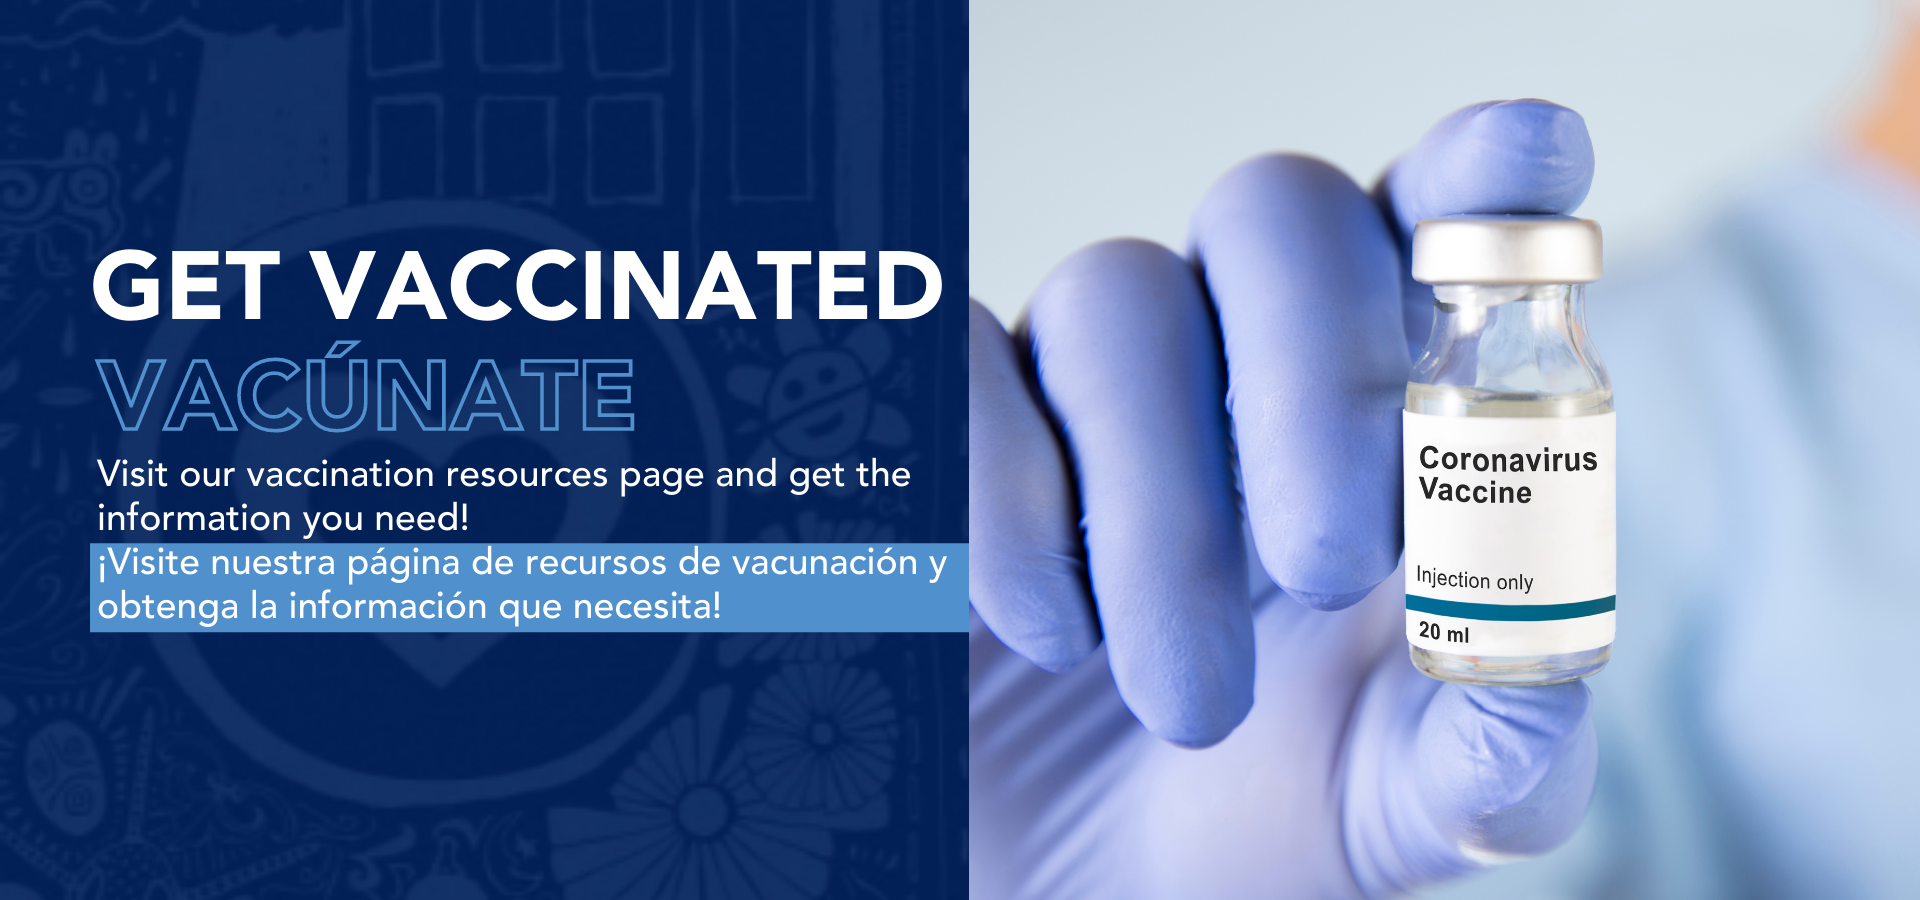 Vaccination Slide